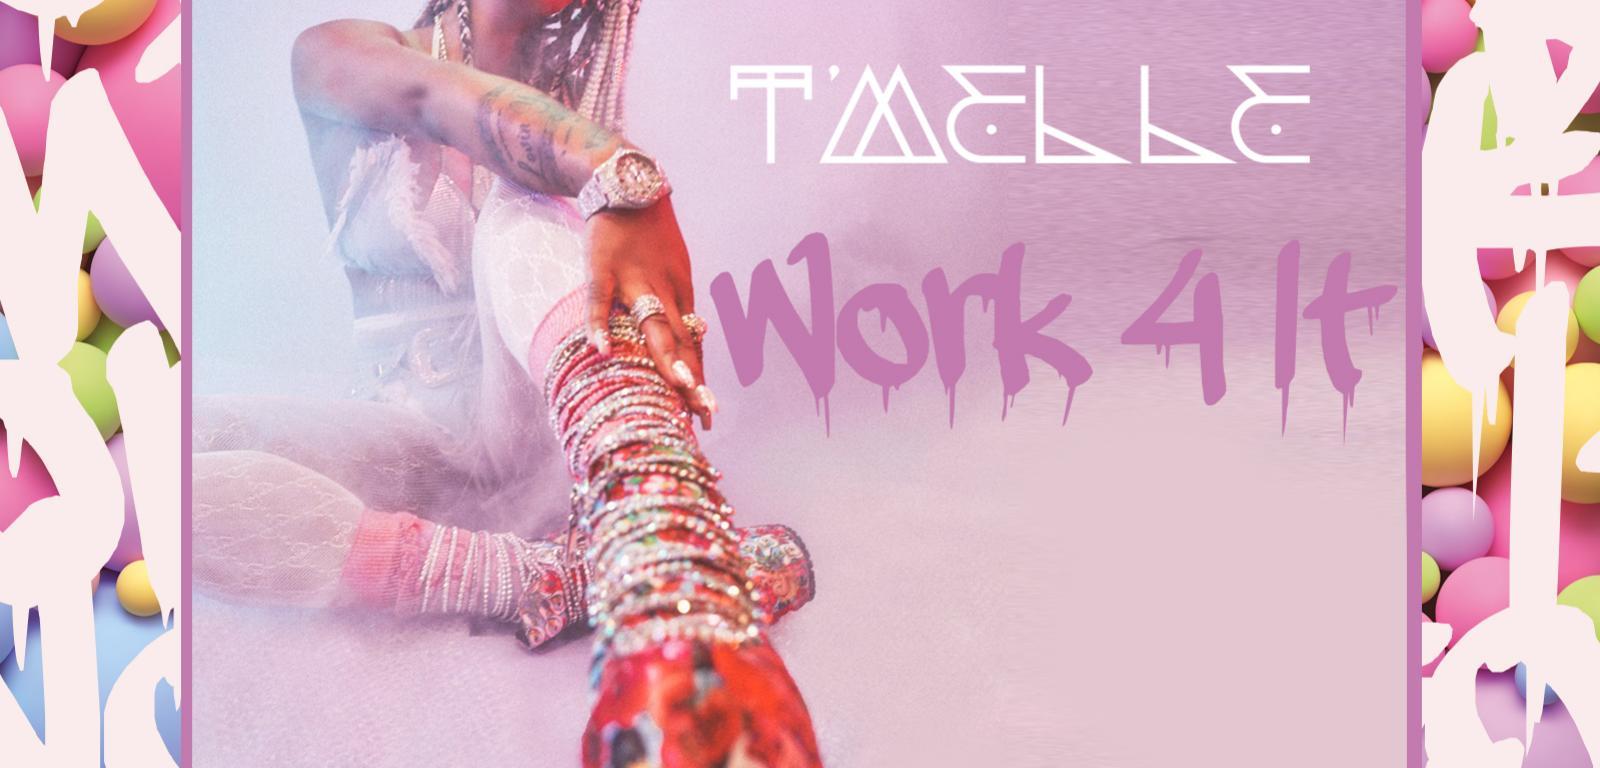 TMelle - Work 4 It